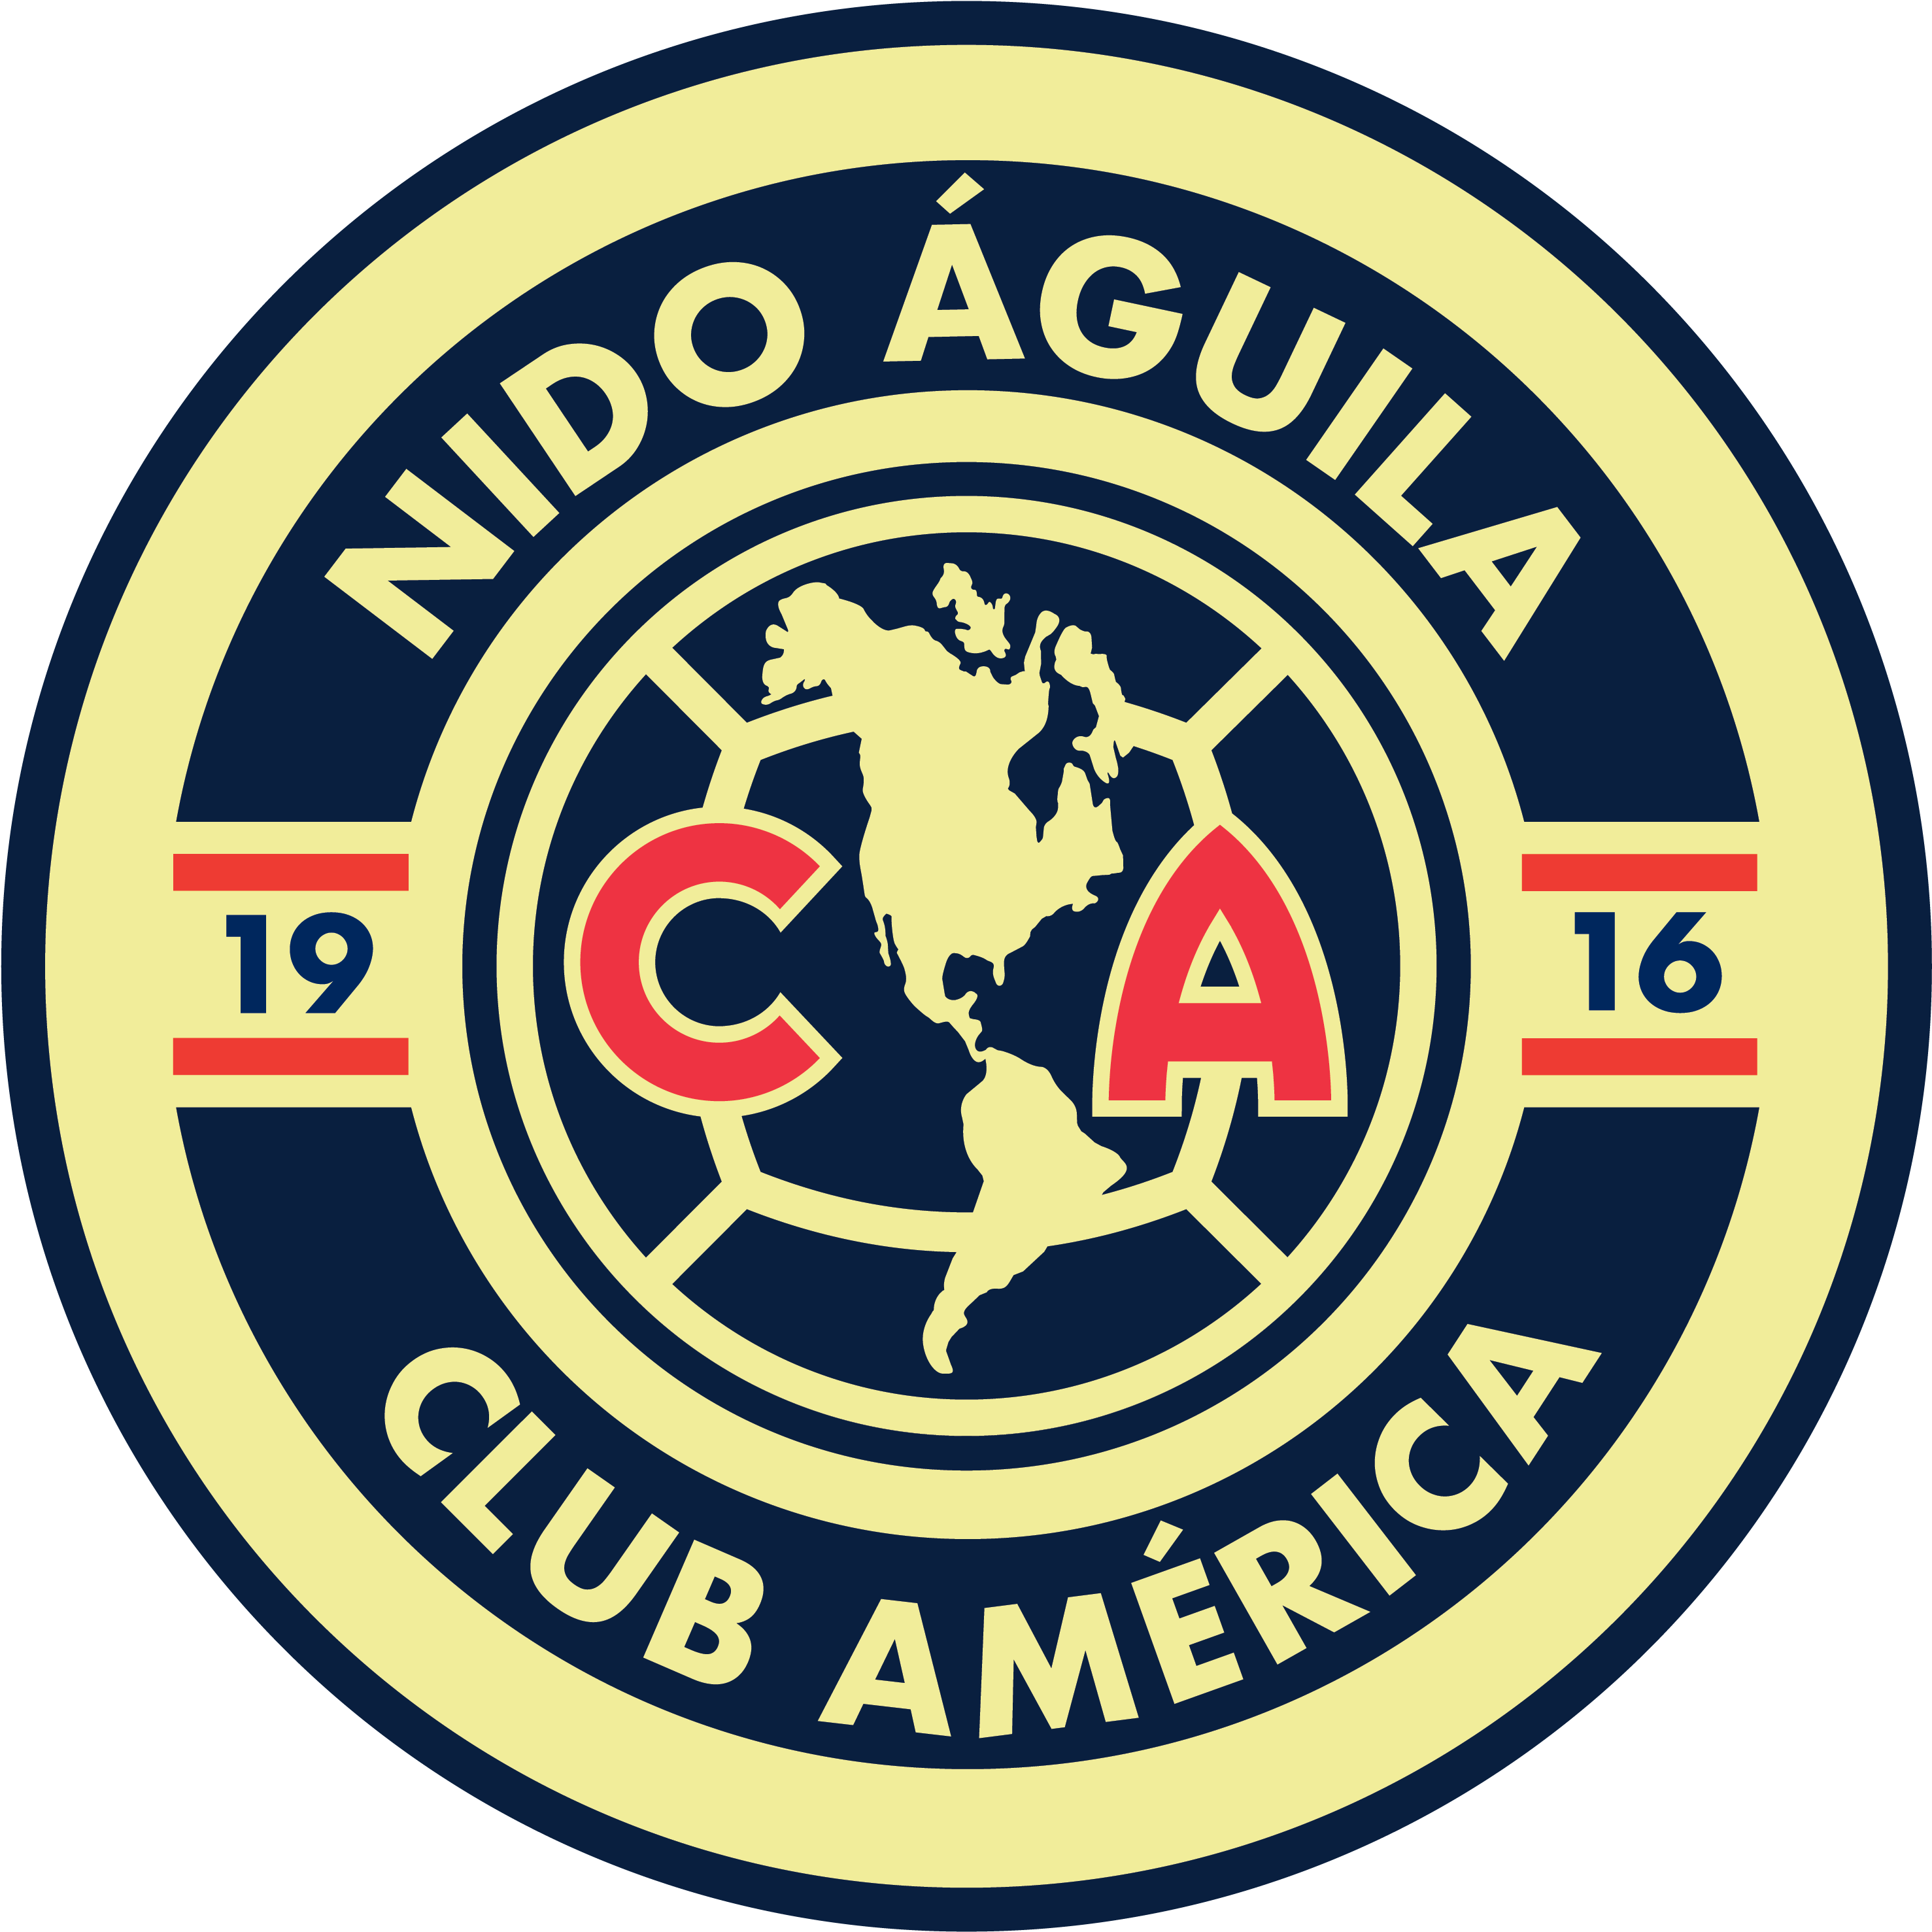 Club America HD Png & Free Club America Hd.png Transparent Image